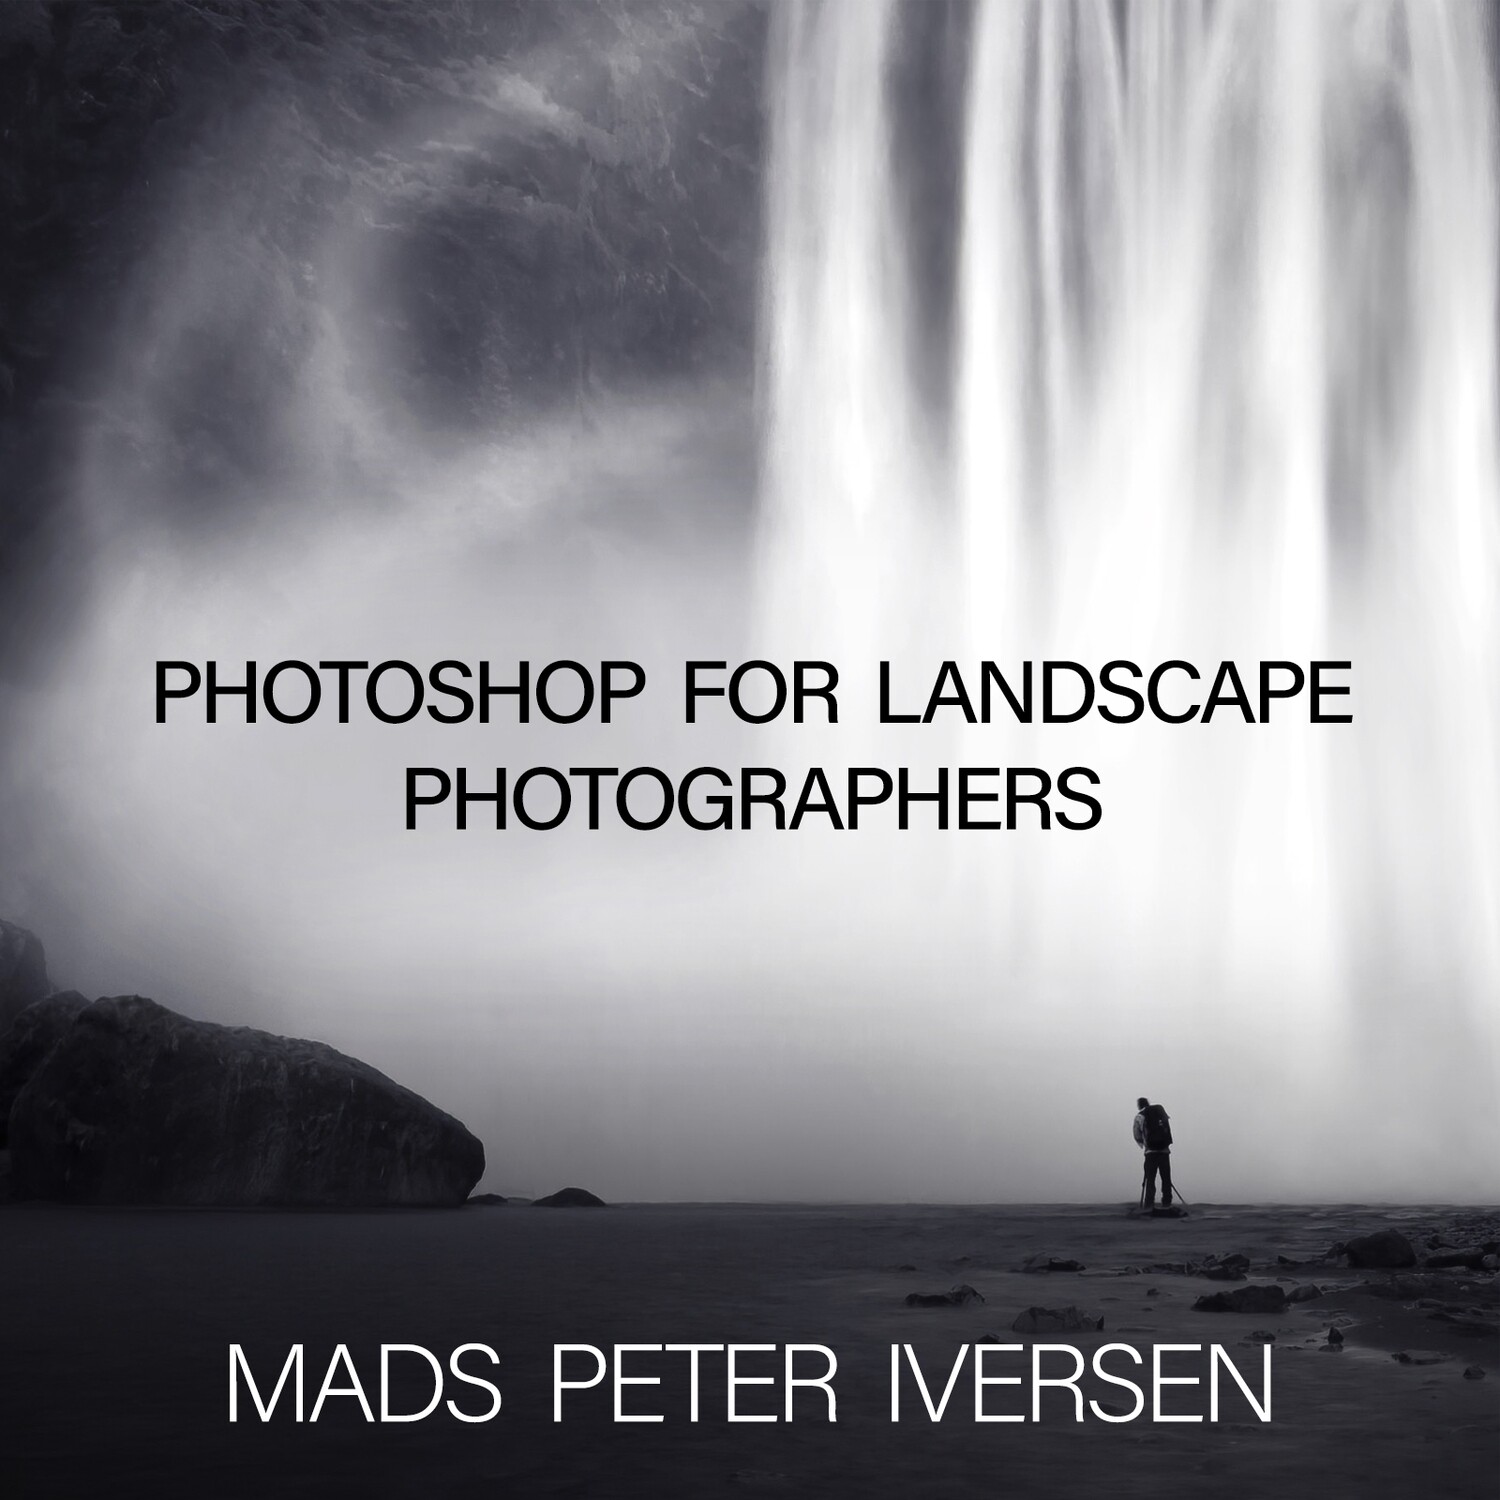 Photoshop for Landscape Photographers | Mads Peter Iversen